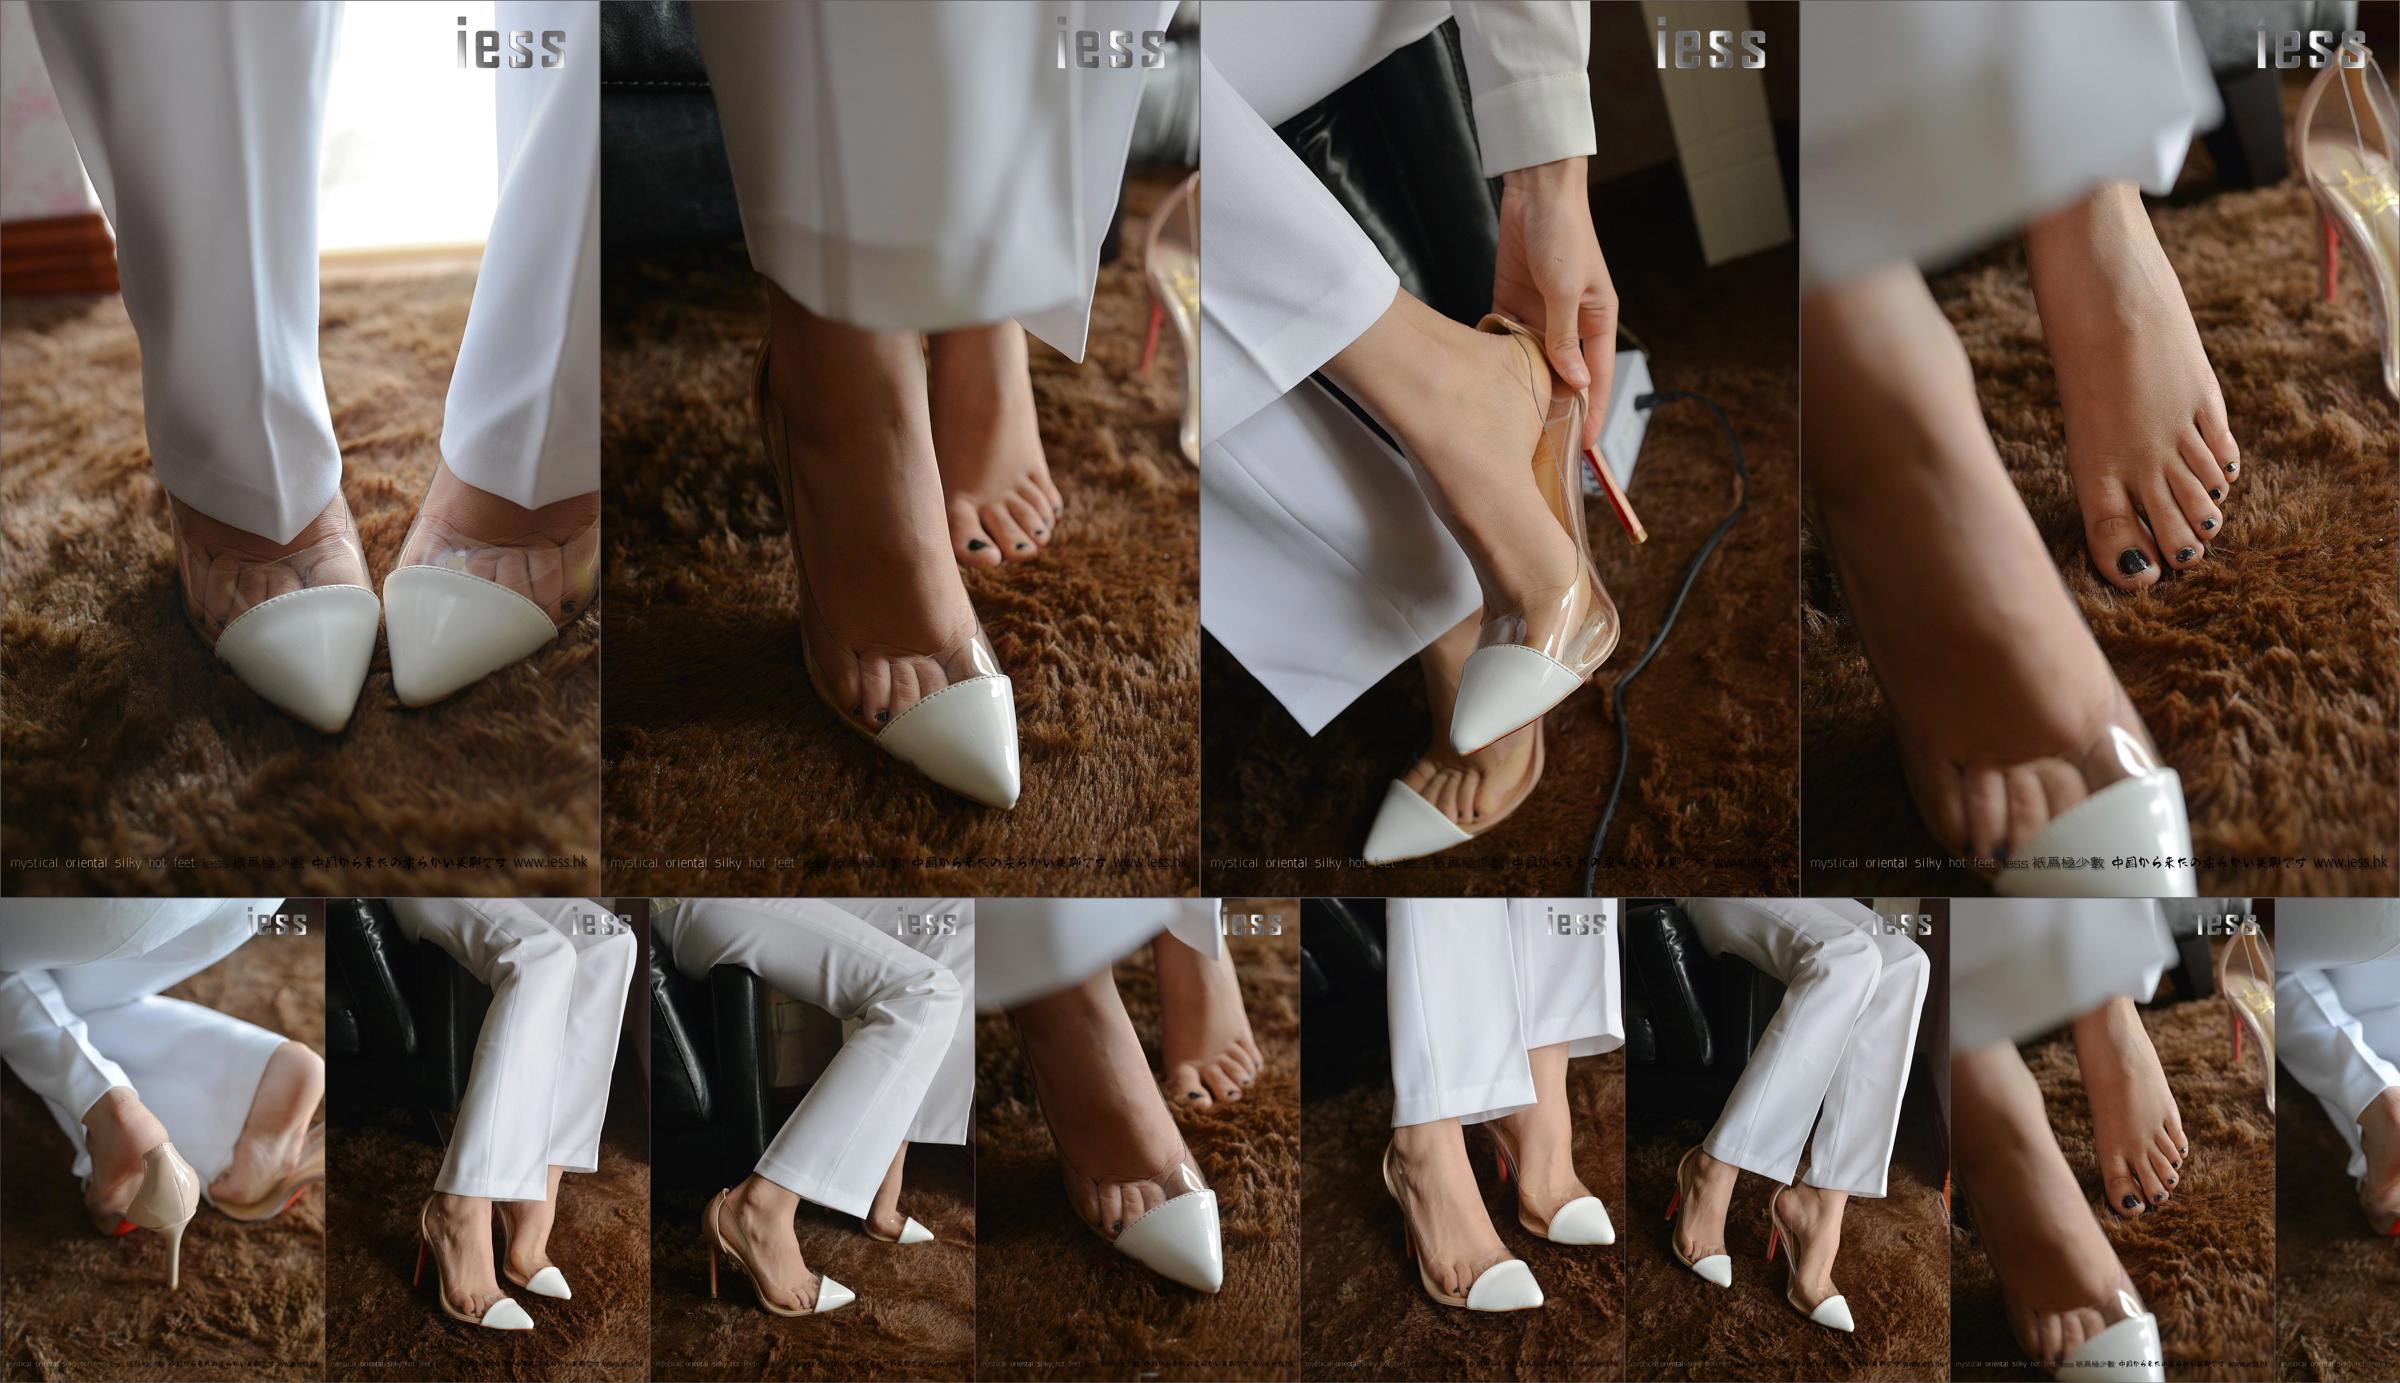 Silky Foot Bento 058 Suspense "Collection-Bare Foot High Heels" [IESS Wei Si Fun Xiang] No.8408fc Halaman 4